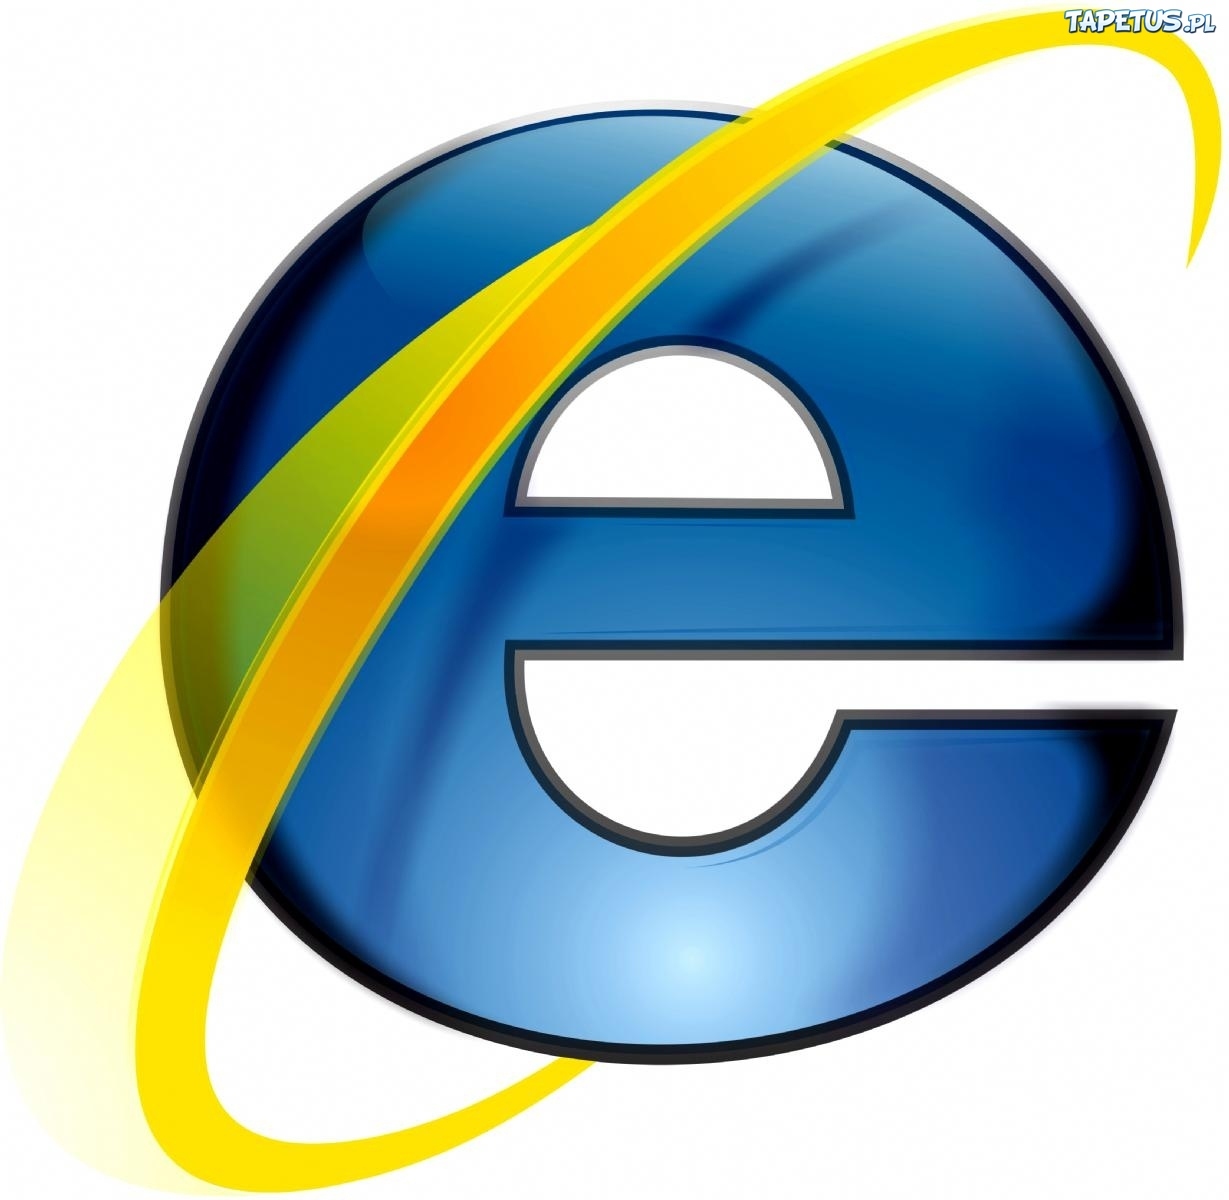 Internet Explorer 9 Logo photo - 1